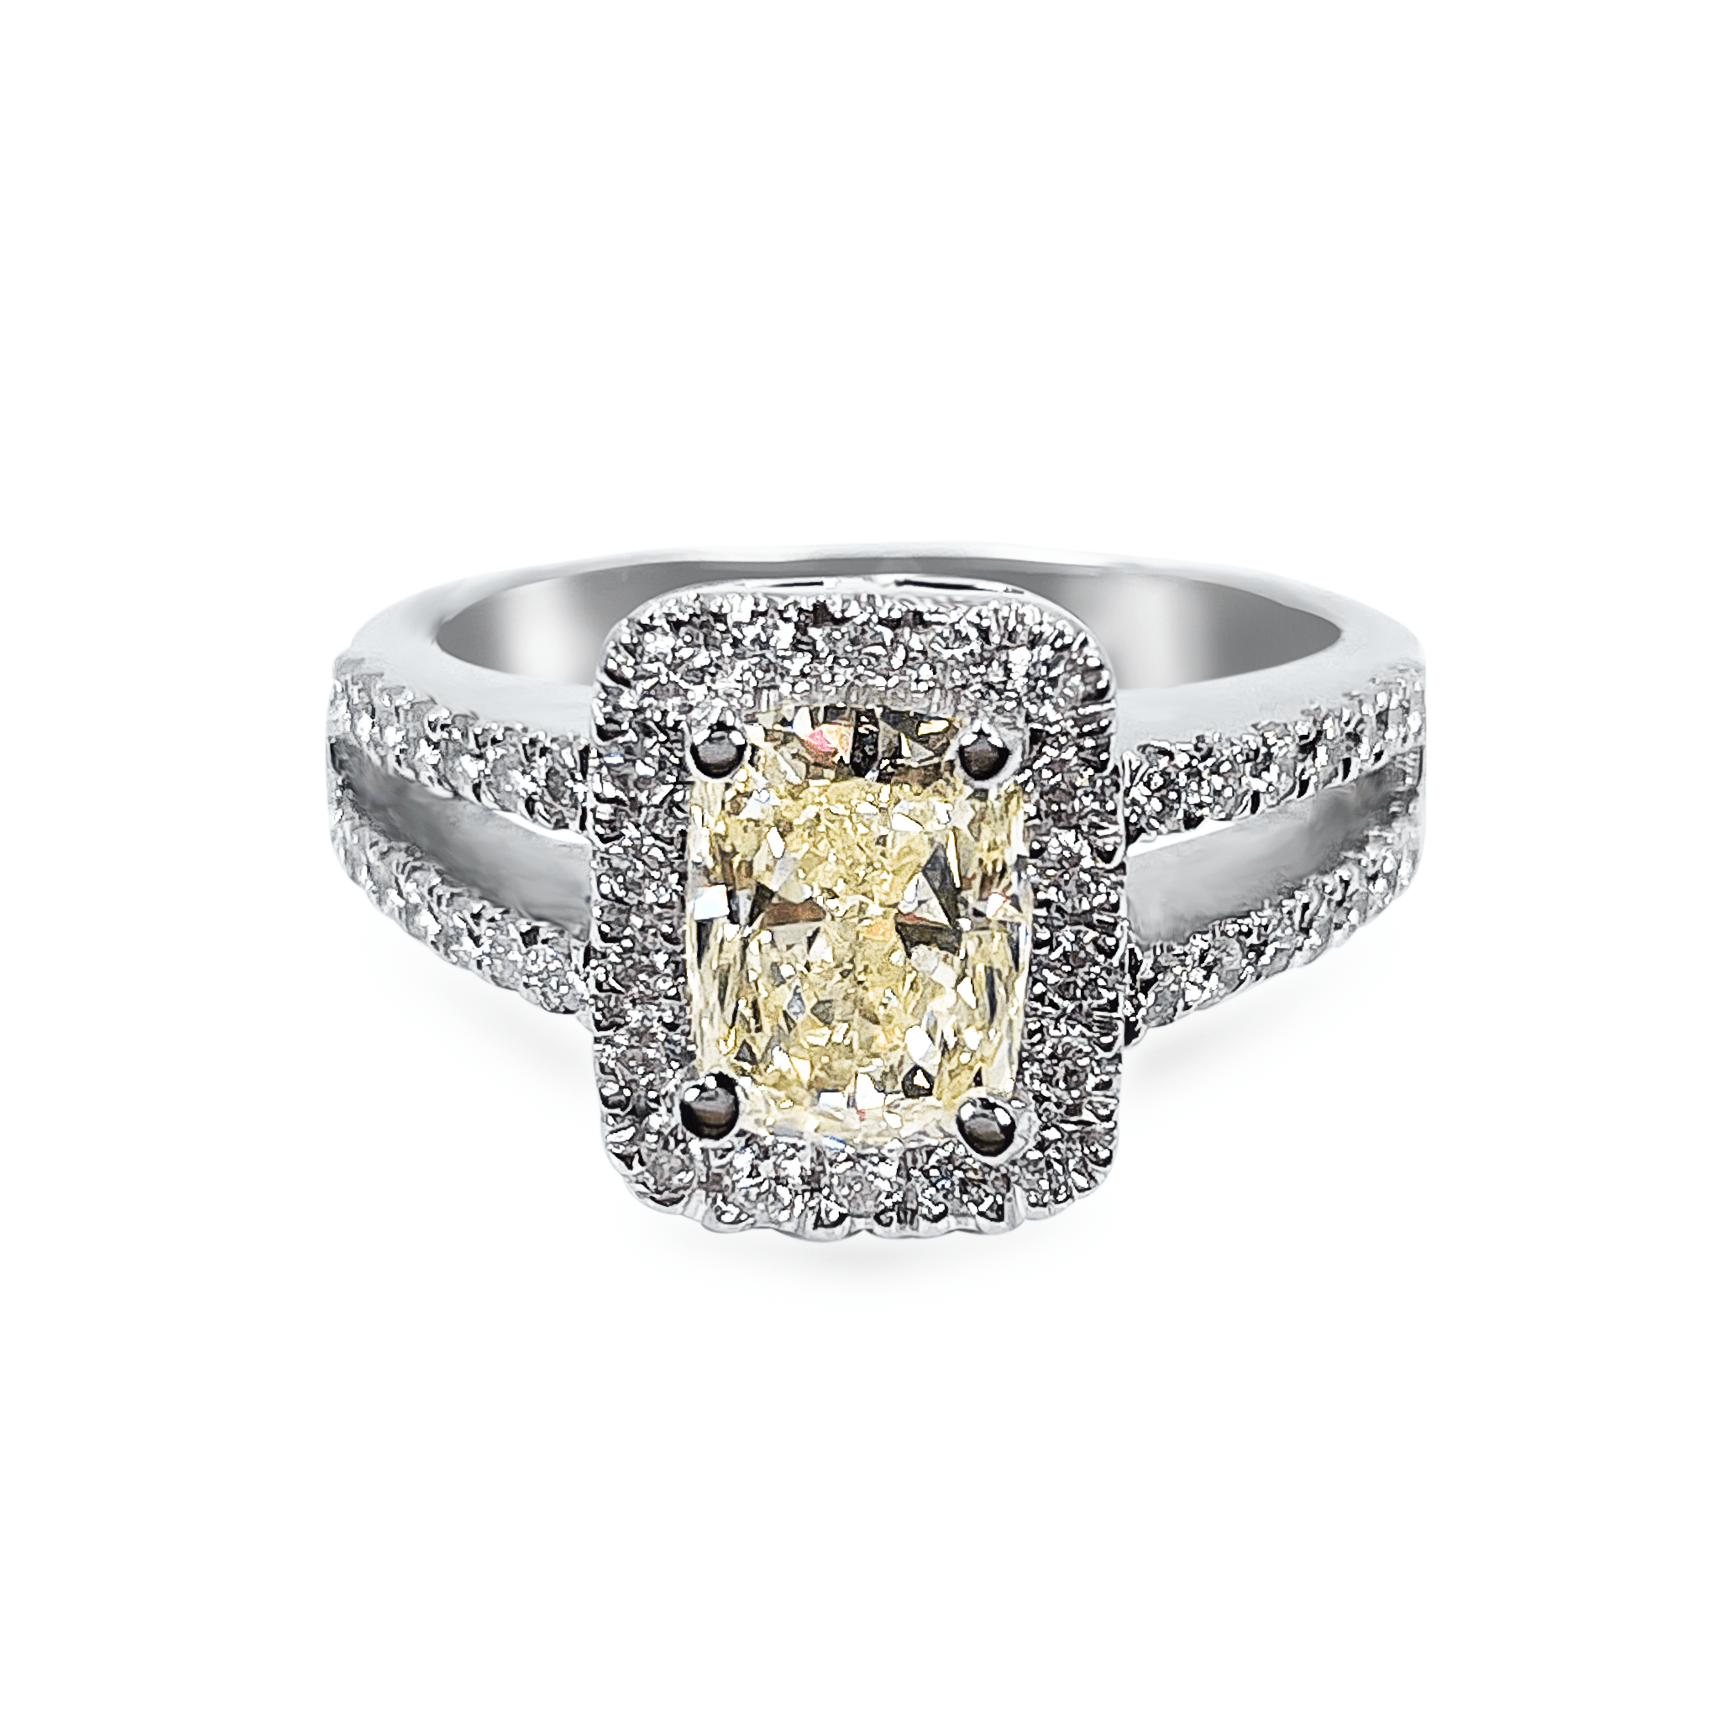 1.52ct Cushion Cut Light Yellow Diamond With Diamond Halo in 18k White Gold- جرس - Luxury Diamond Jewelry shop Dubai - SABA DIAMONDS